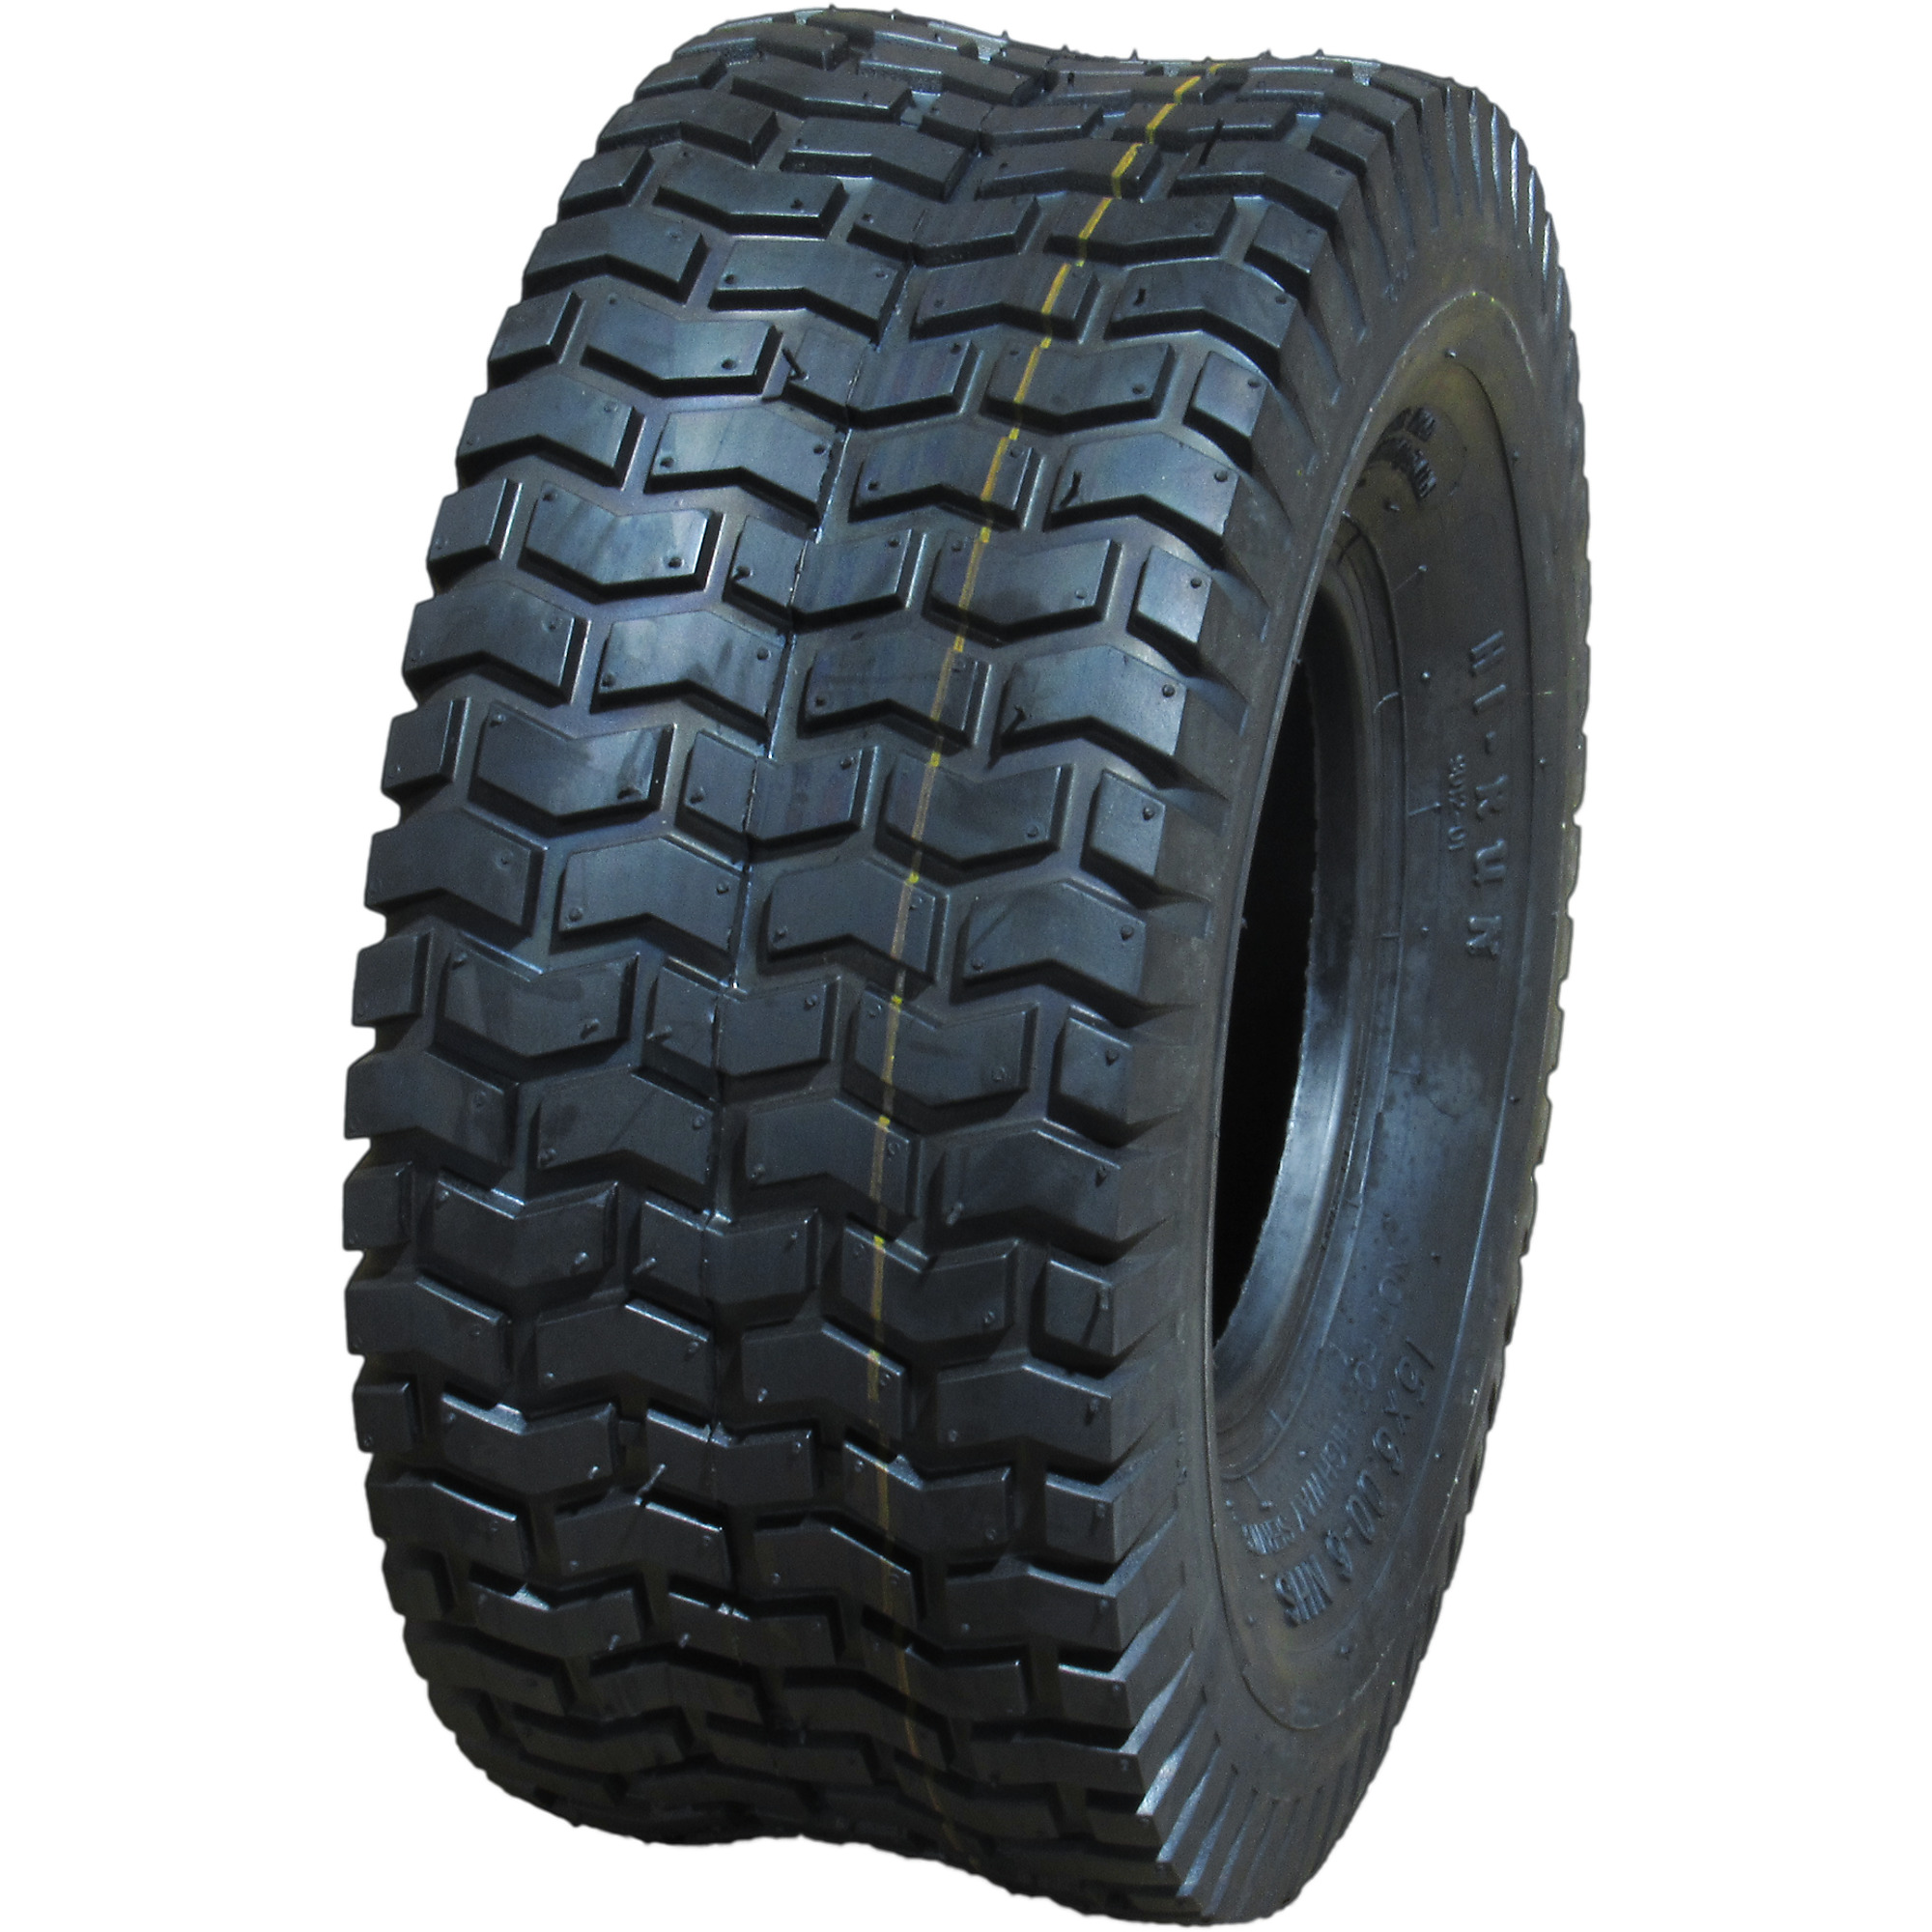 HI-RUN, Lawn Garden Tire, SU12 Turf II, Tire Size 18X9.50-8 Load Range Rating B, Model WD1280